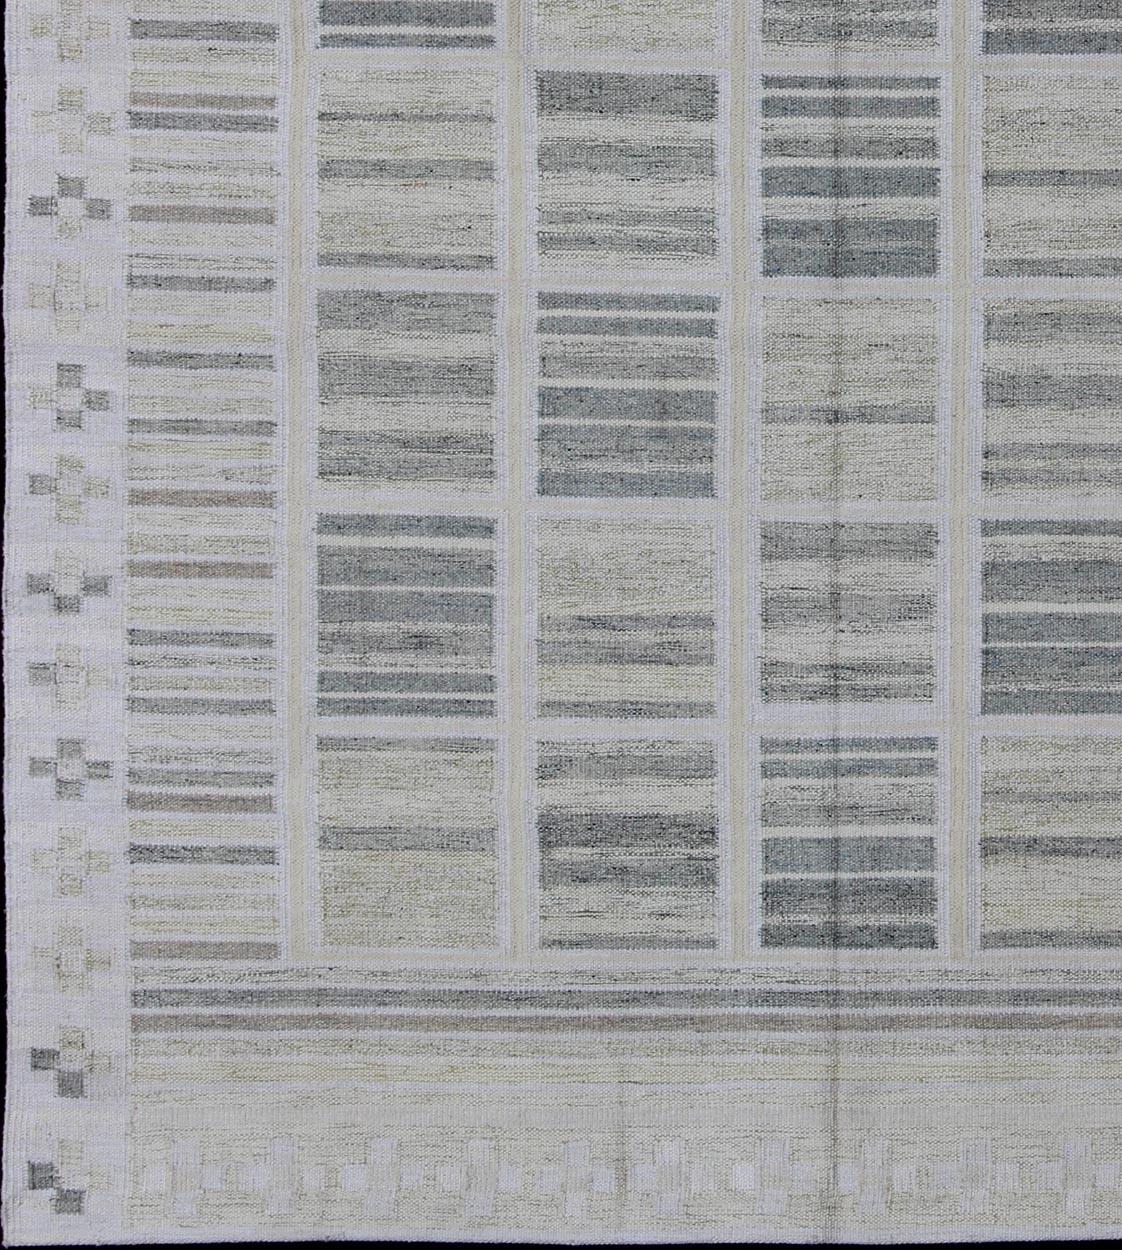 Shades of gray modern Scandinavian flat-weave rug with neutral stripe design, rug rjk-20011-shb-004-02, country of origin / type: India / Scandinavian flat-weave.

This Scandinavian flat-weave is inspired by the work of Swedish textile designers